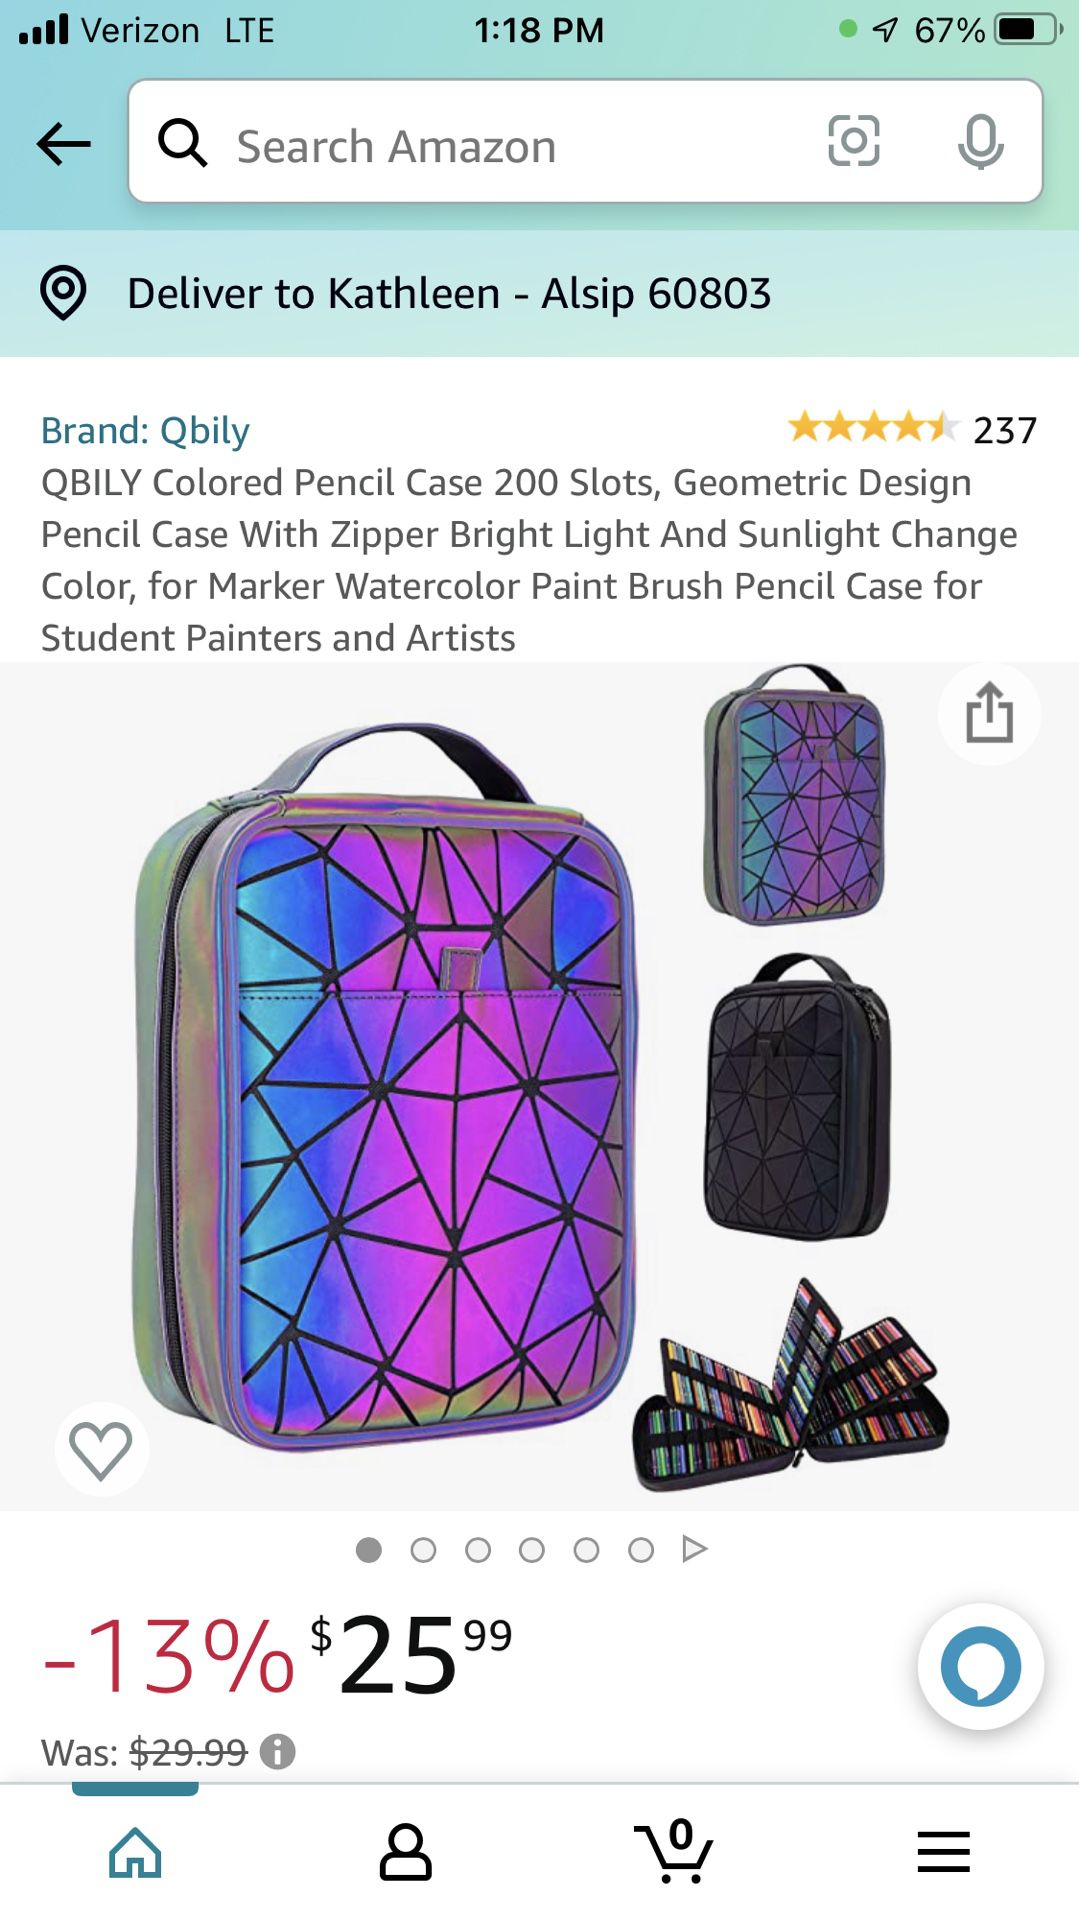 QBILY Colored Pencil Case 200 Slots, Geometric Design Pencil Case